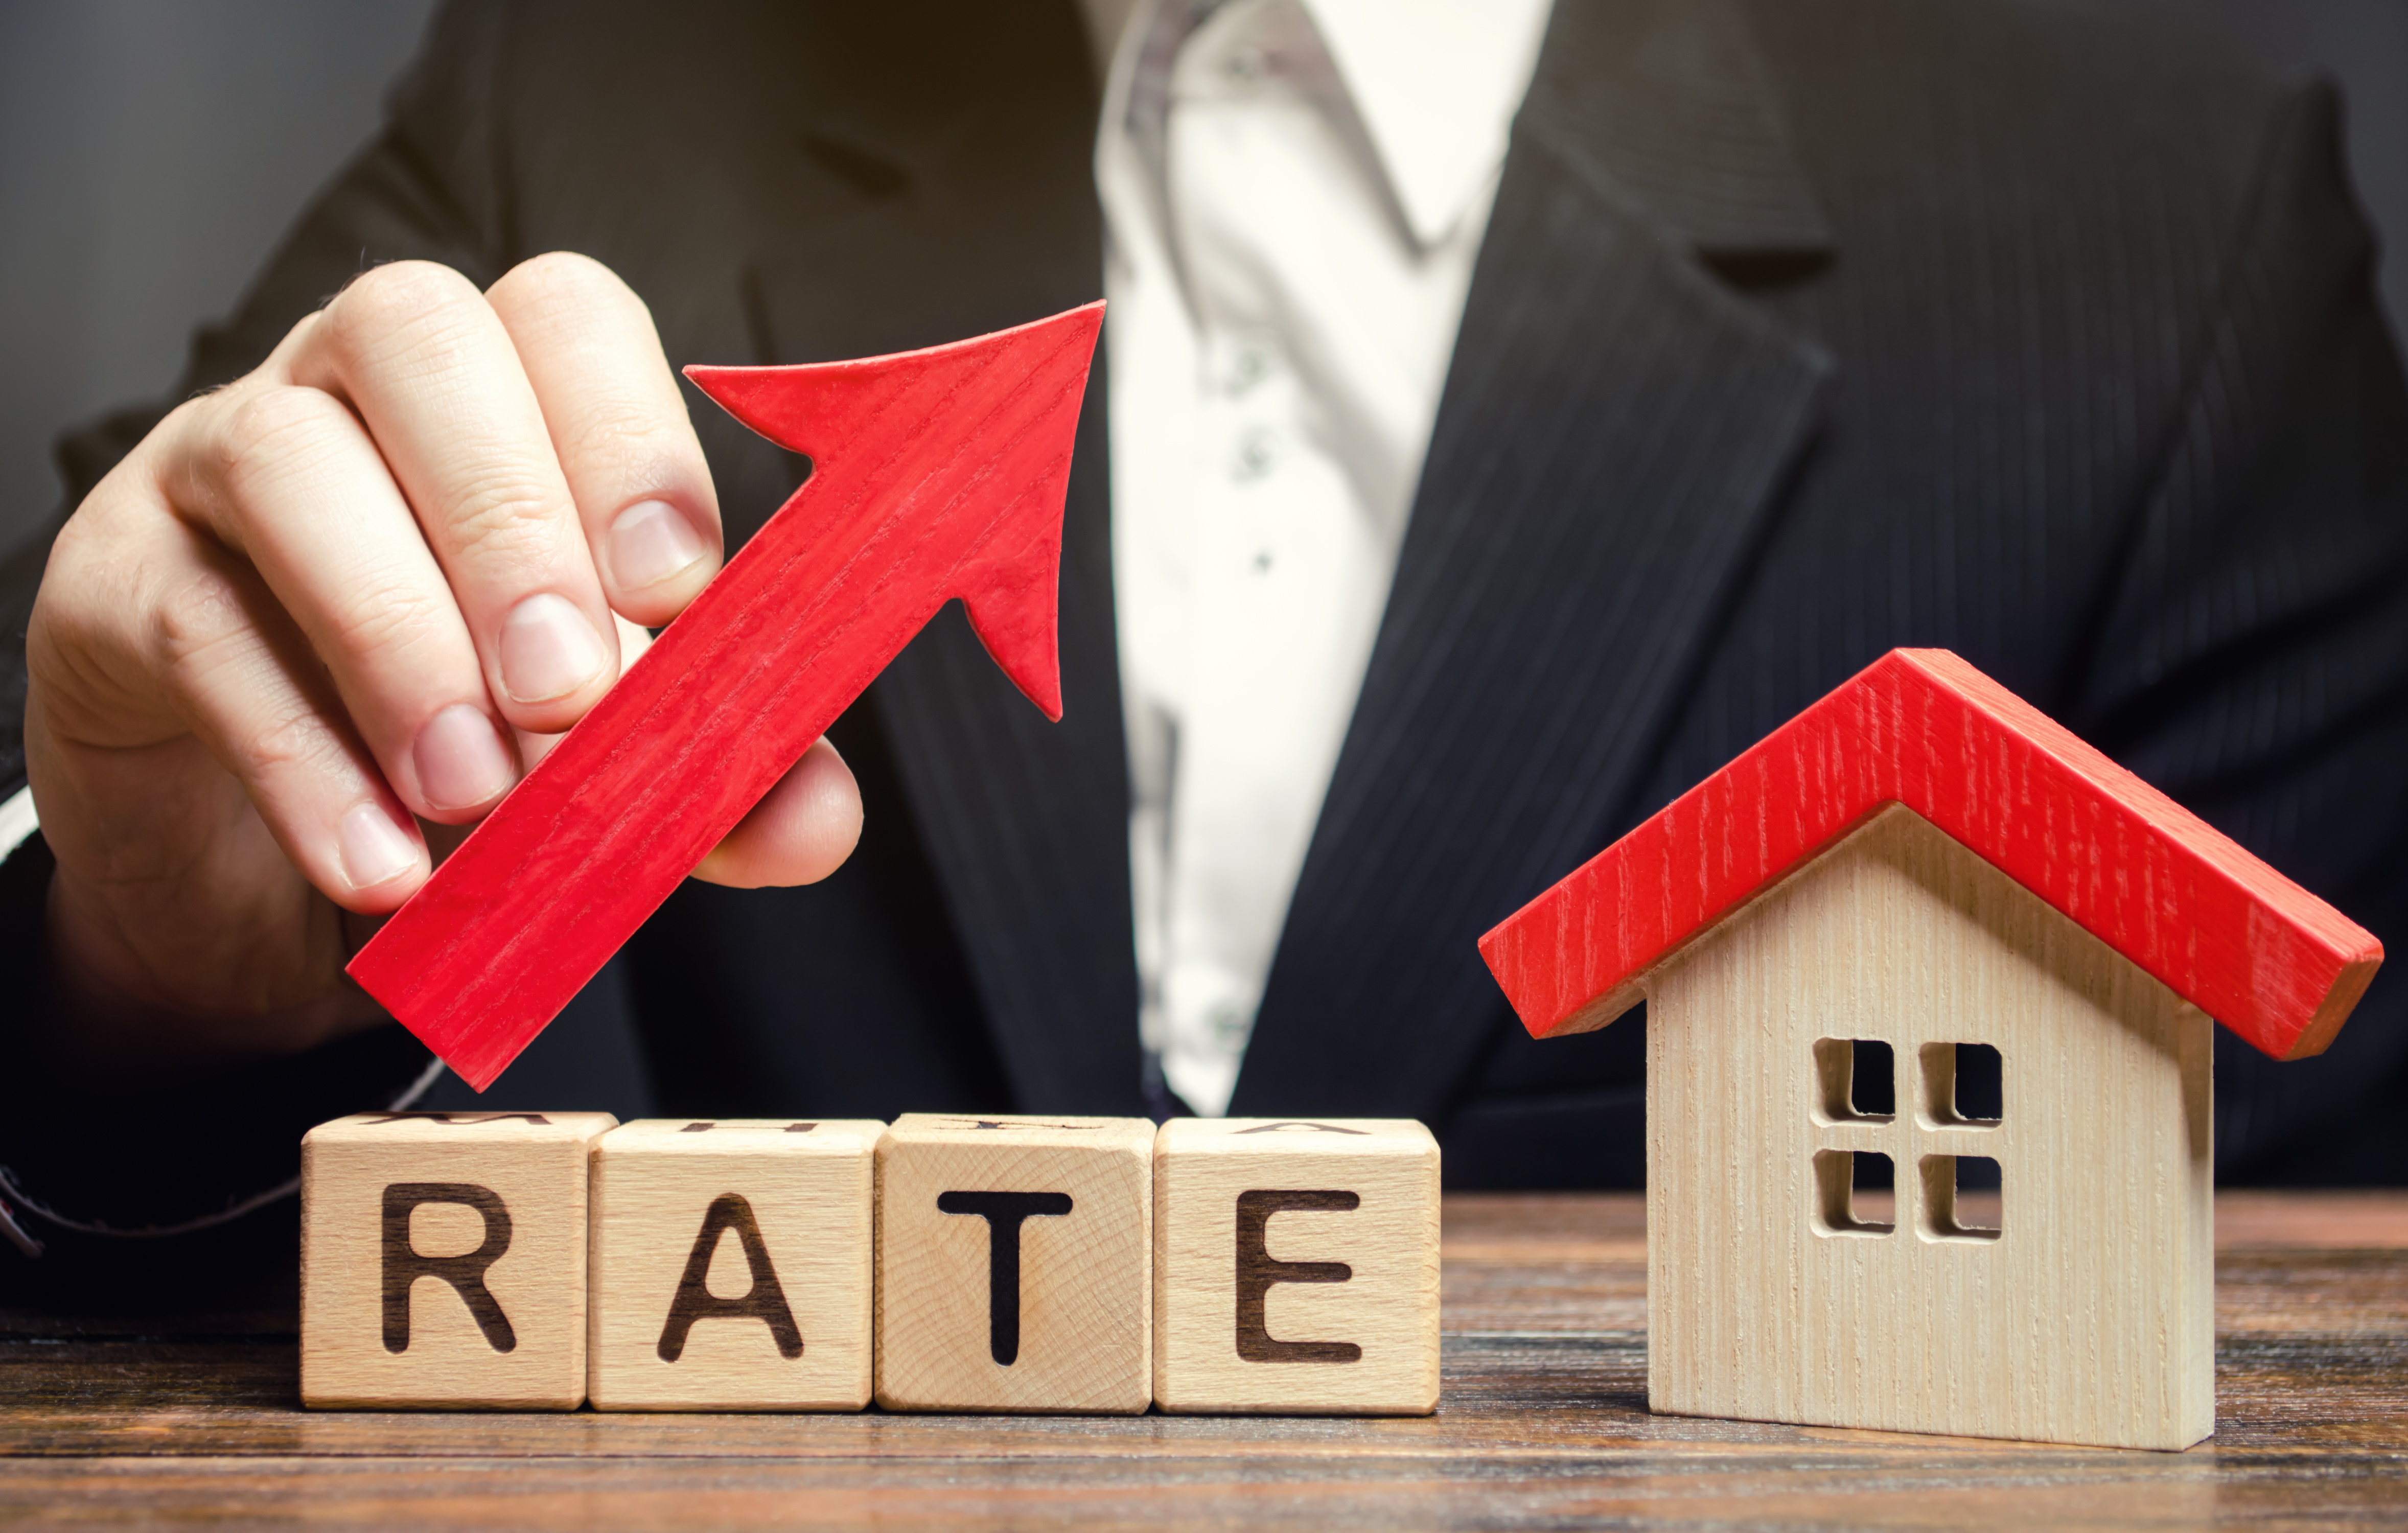 interest rates rising over housing market blocks